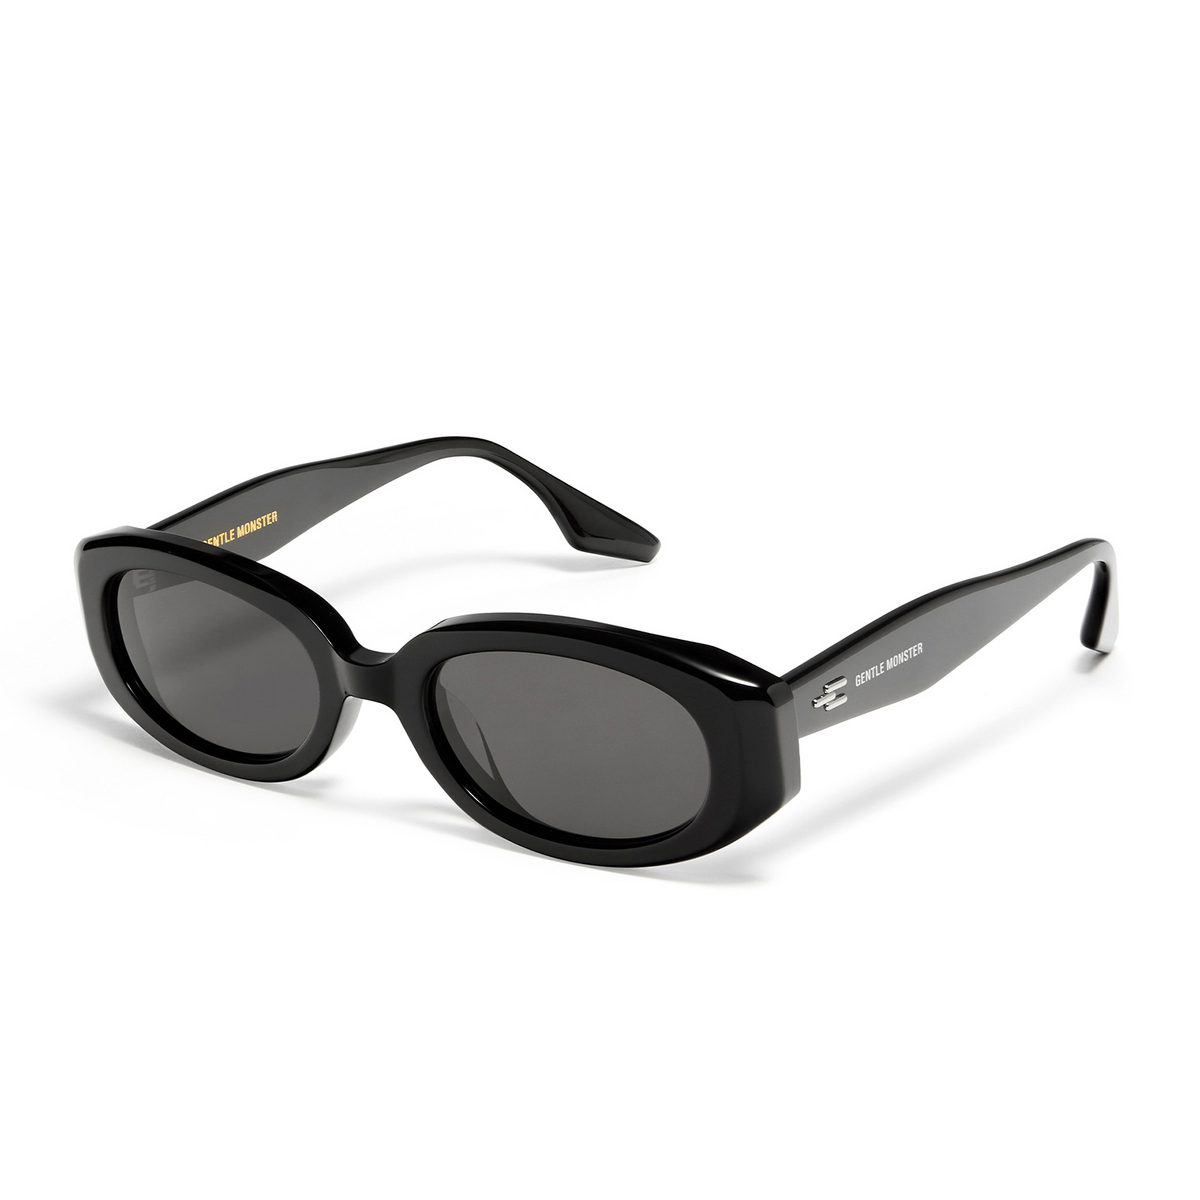 Gentle Monster® Oval Sunglasses: Oto color Black 01 - three-quarters view.